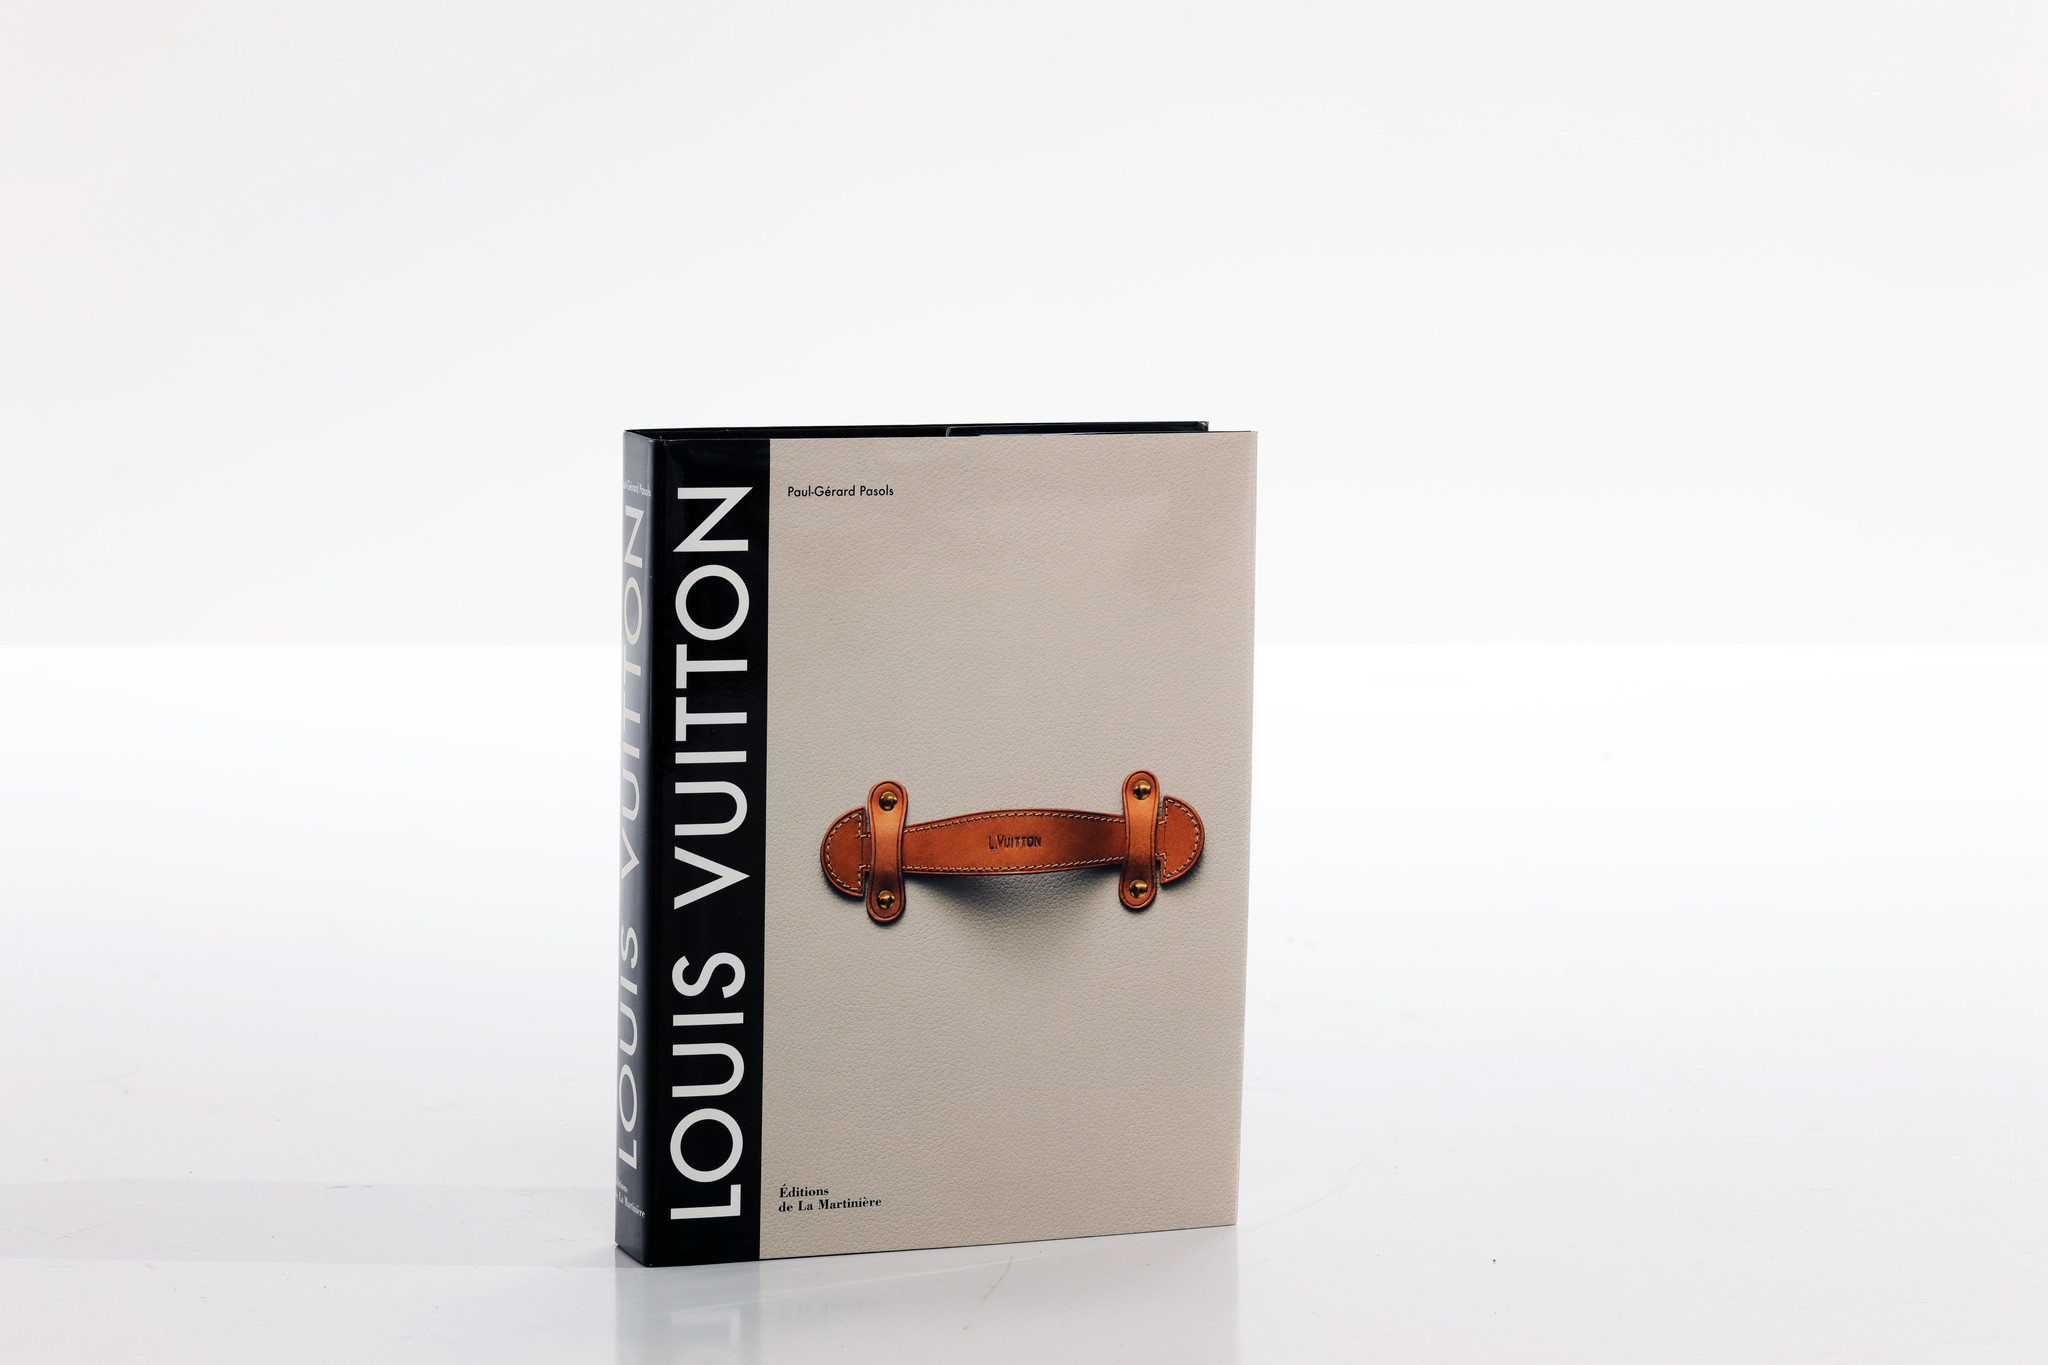 Louis Vuitton Book "The birth of modern luxury", 2004